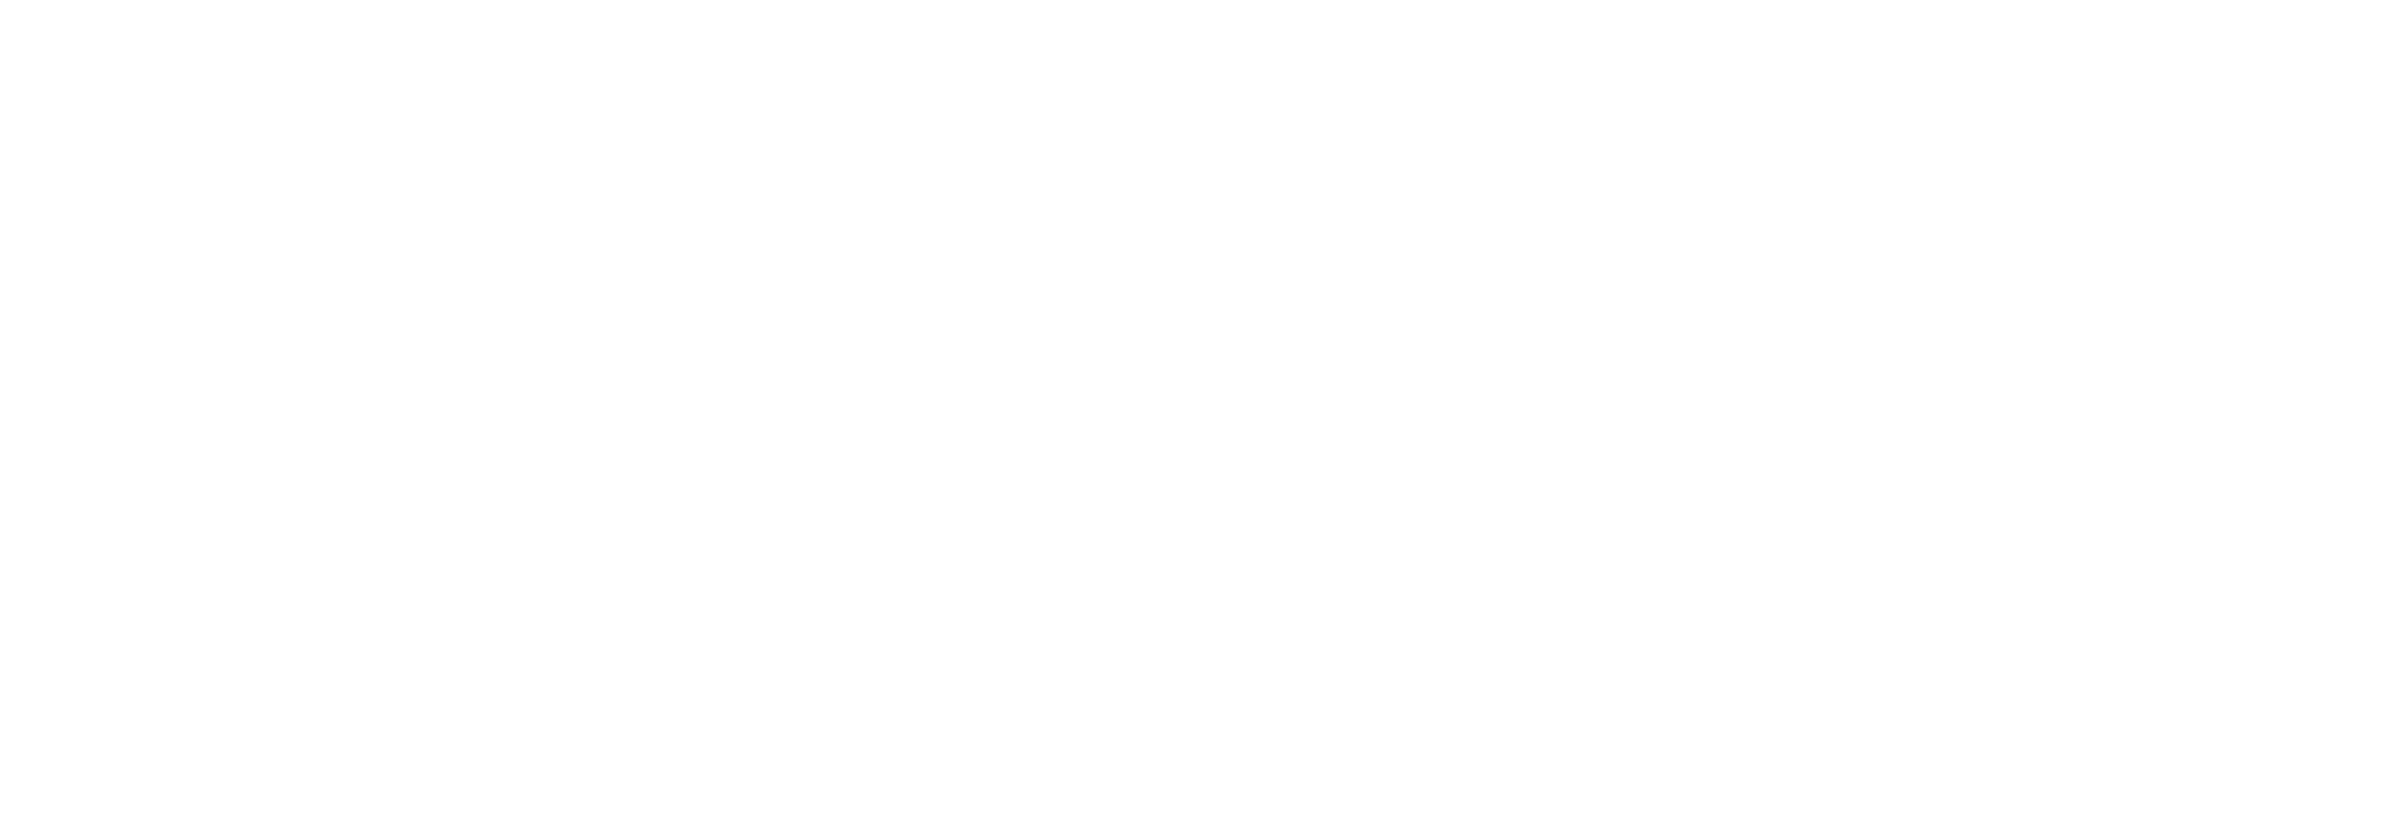 Nestlé PNG Free File Download